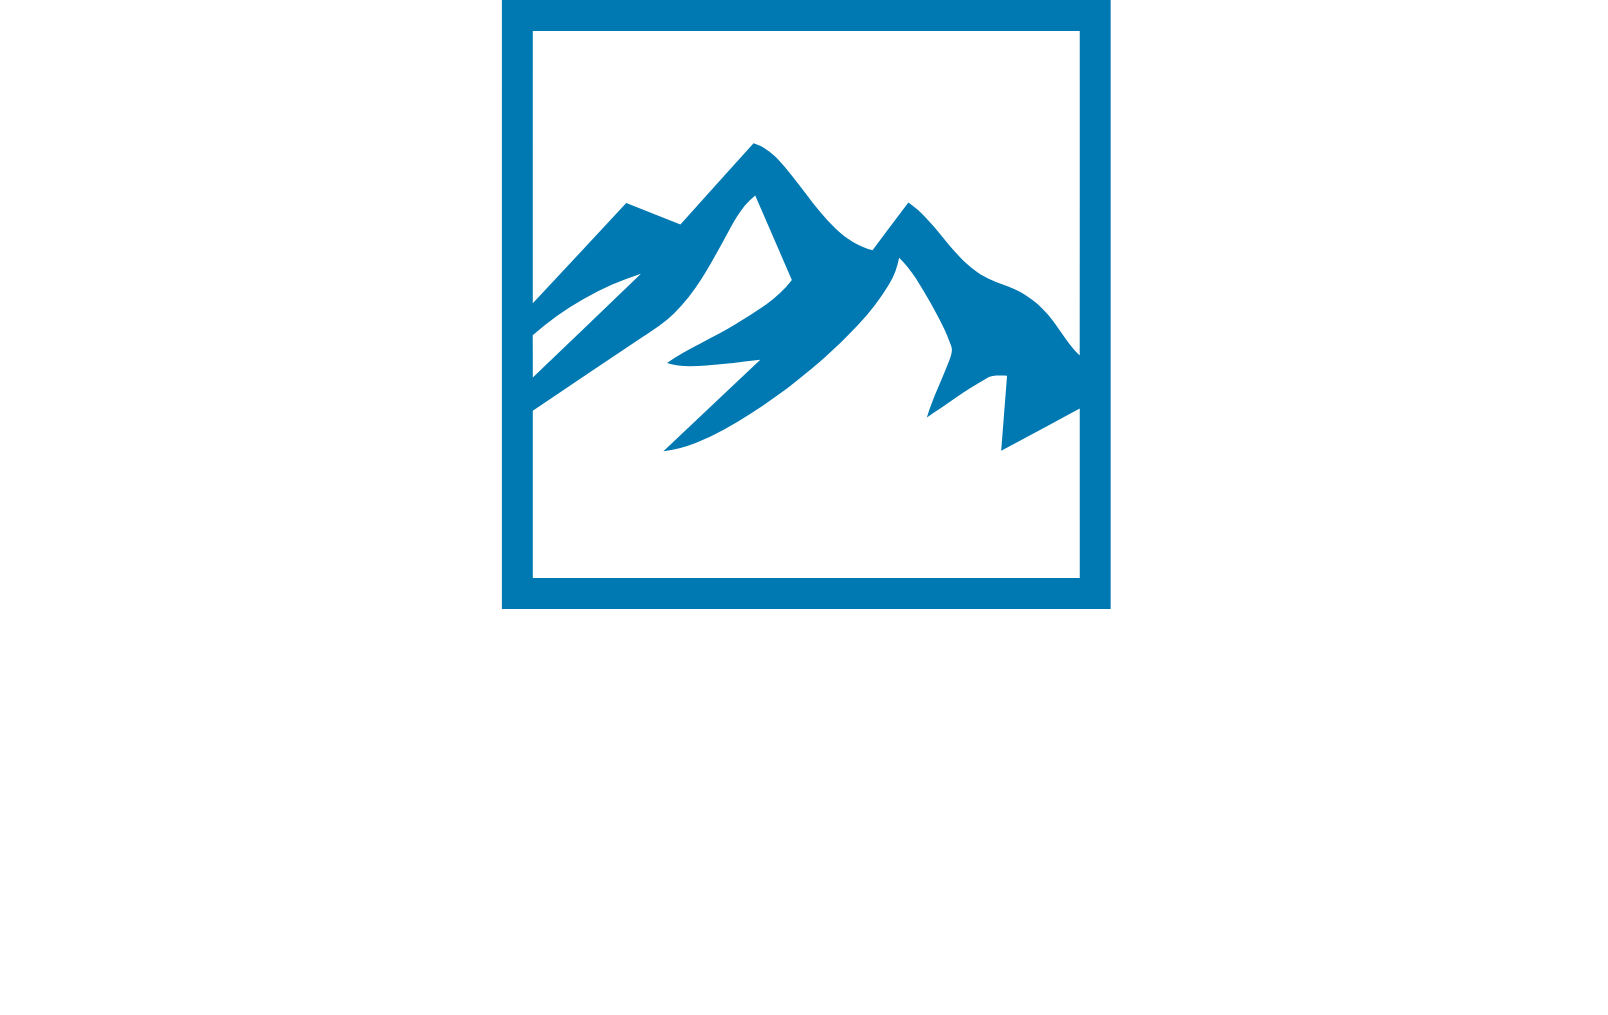 Logan Ridge Finance logo large for dark backgrounds (transparent PNG)